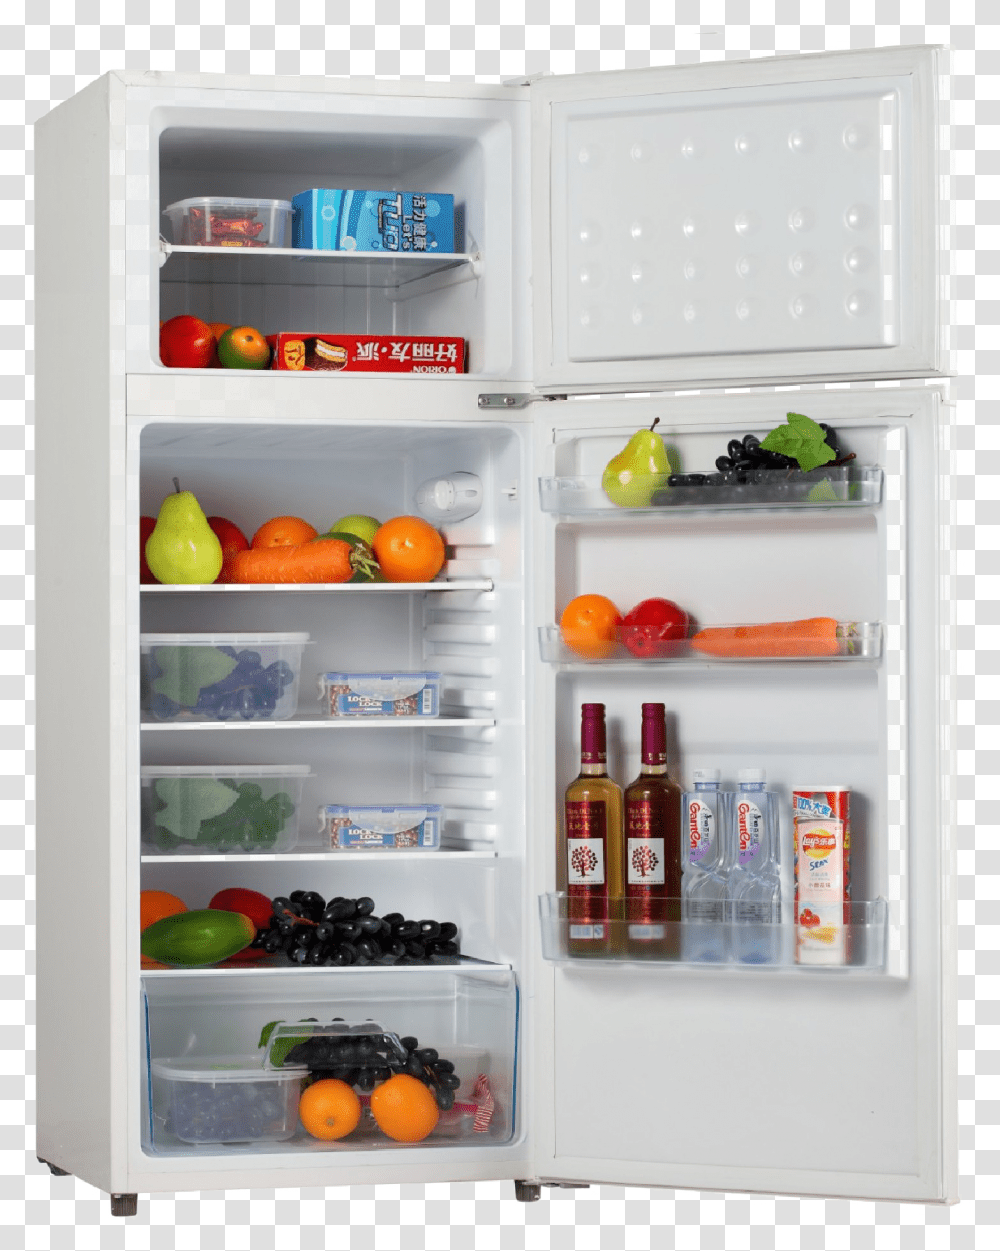 Freezer Refrigerator Image, Appliance, Plant, Shelf Transparent Png